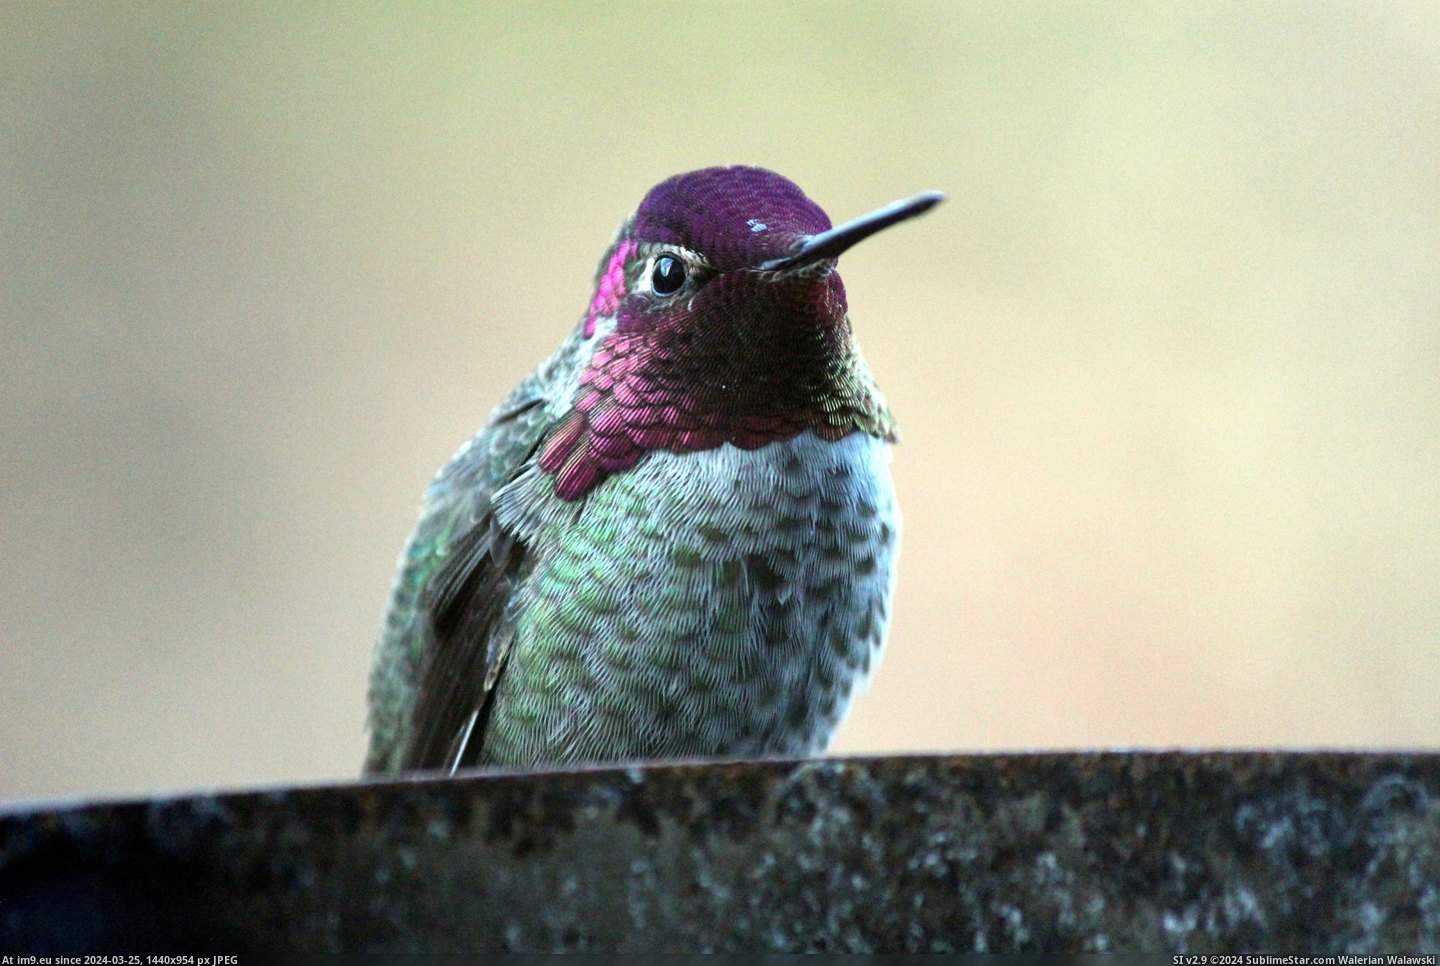 #Was #Morning #Showing #Changed #Angle #Hummingbird #Iridescent #Off #Head #Hood [Pics] A hummingbird showing off his iridescent hood this morning. The only thing that changed was the angle of his head. 7 Pic. (Изображение из альбом My r/PICS favs))